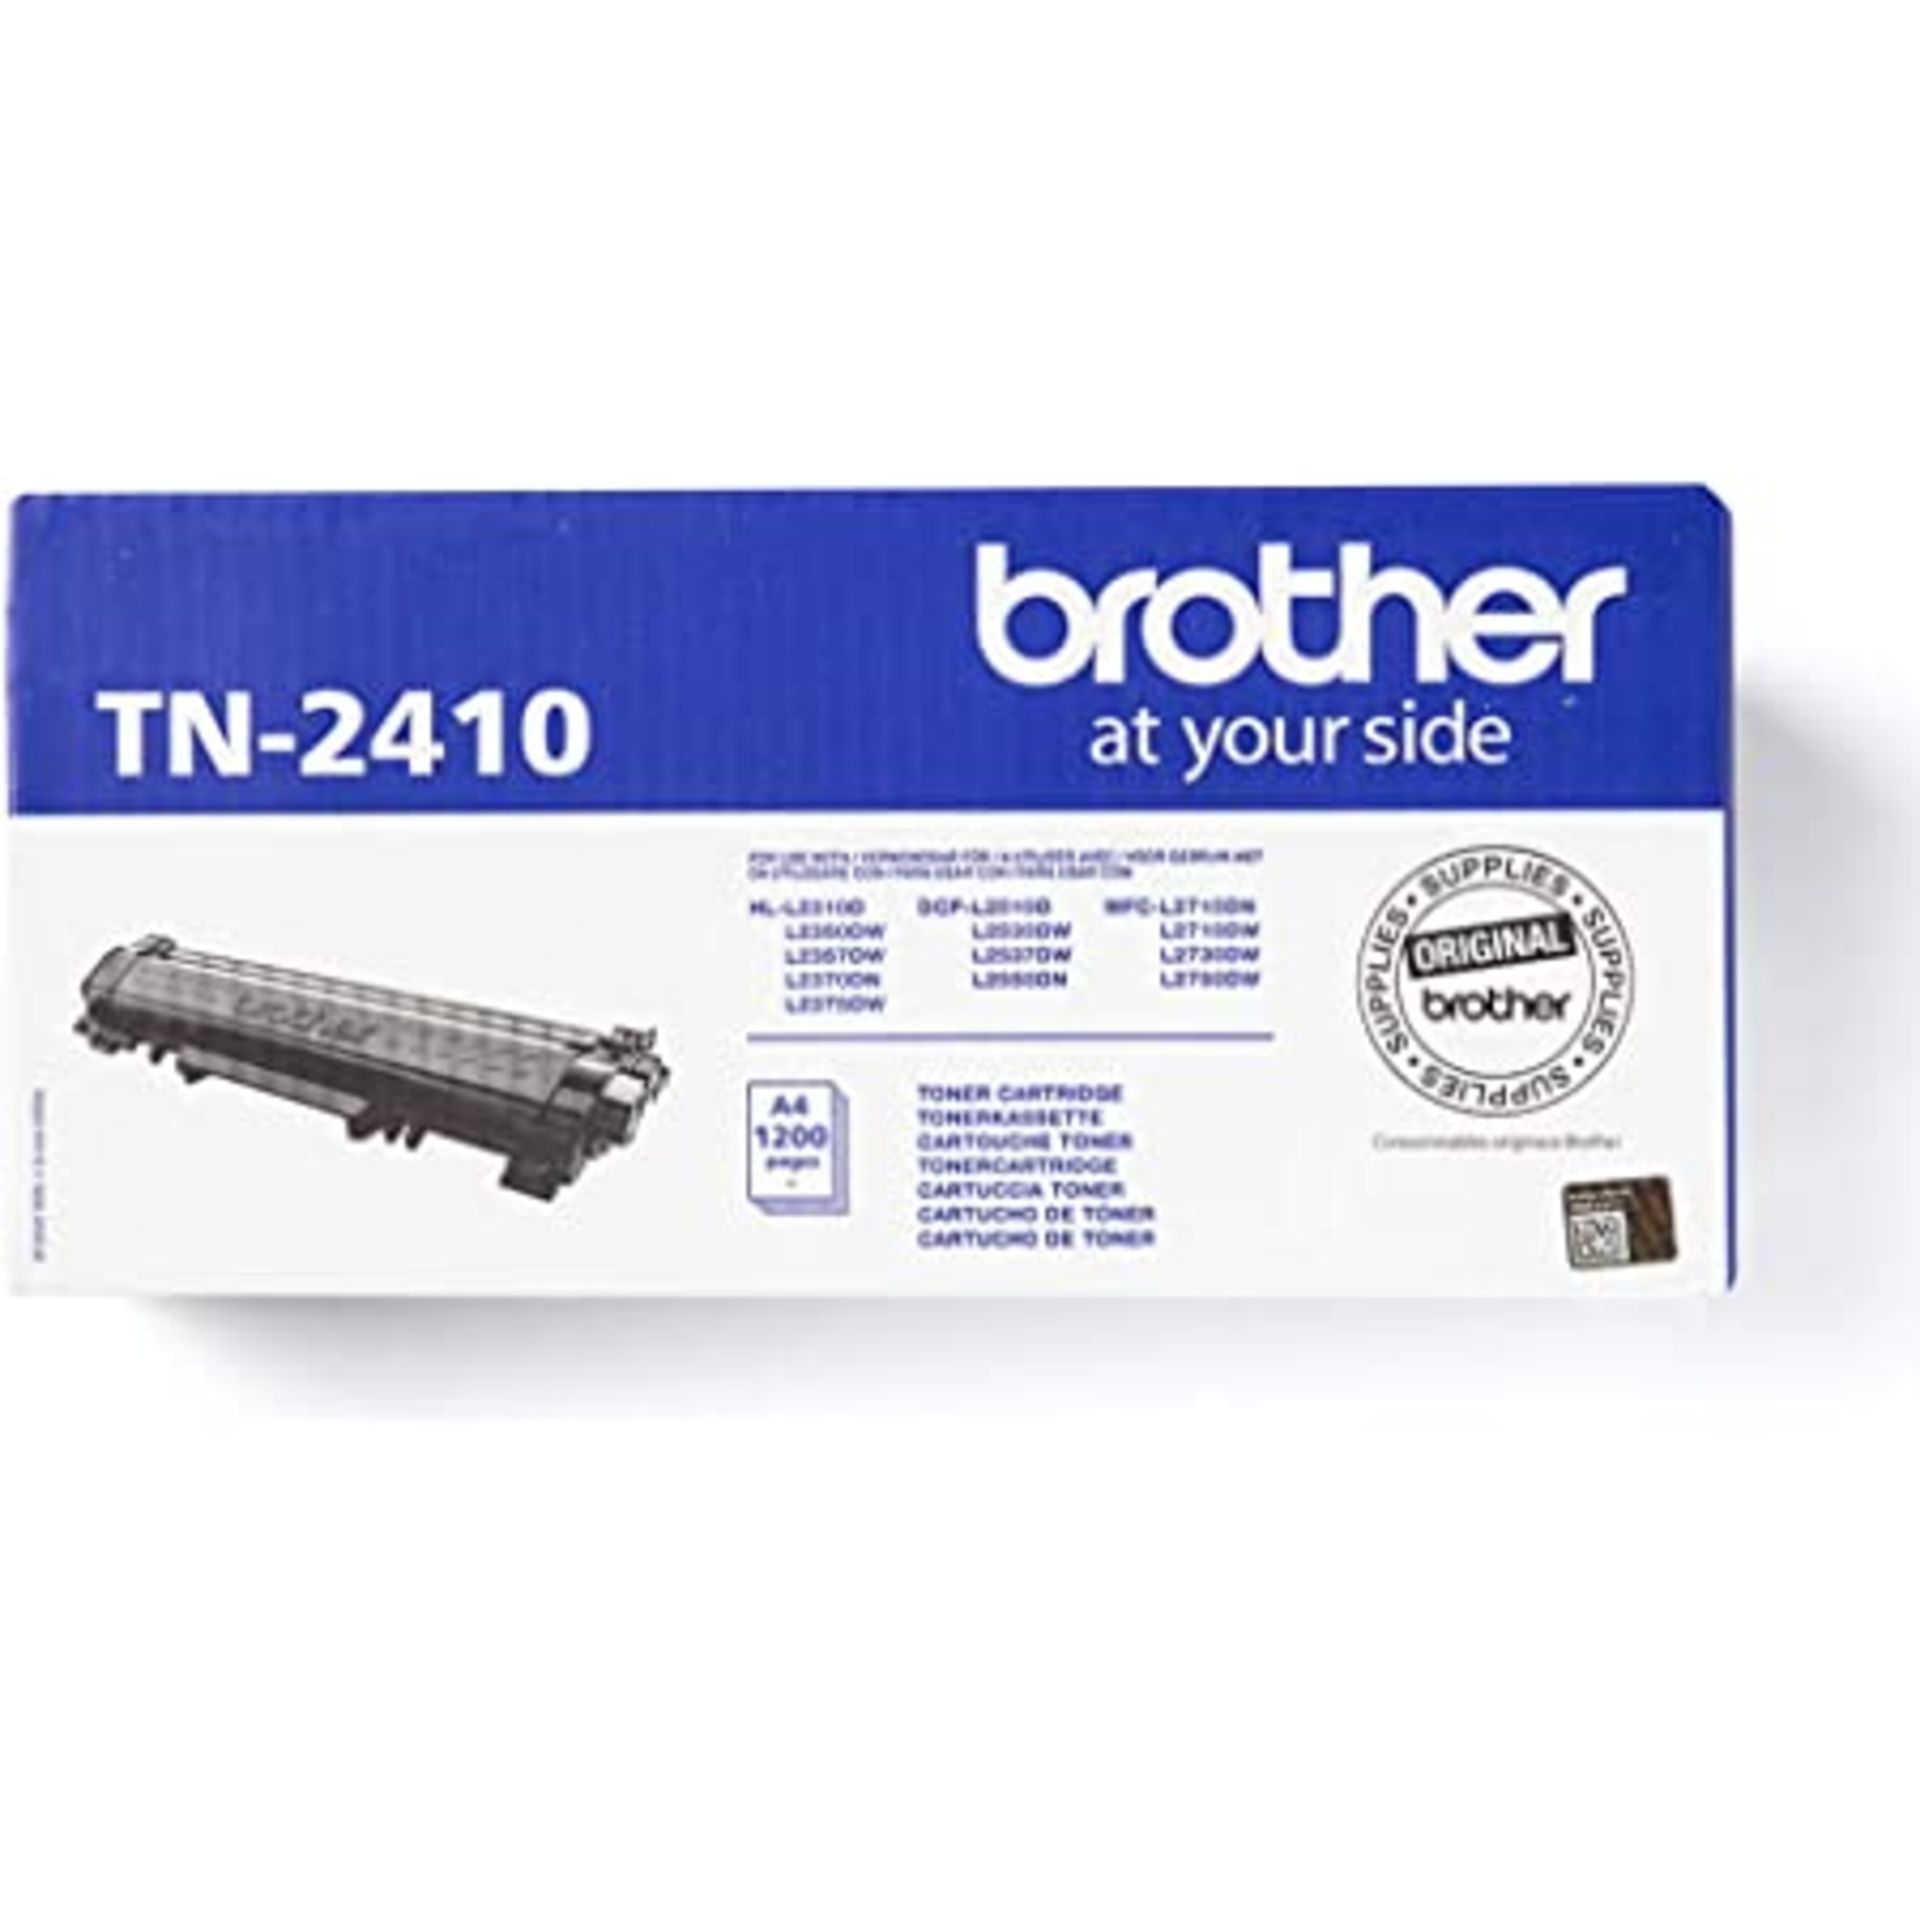 RRP-£40 Brother TN-2410 Toner Cartridge, Black, Single Pack, Standard Yield, Includes 1 x Toner Cart